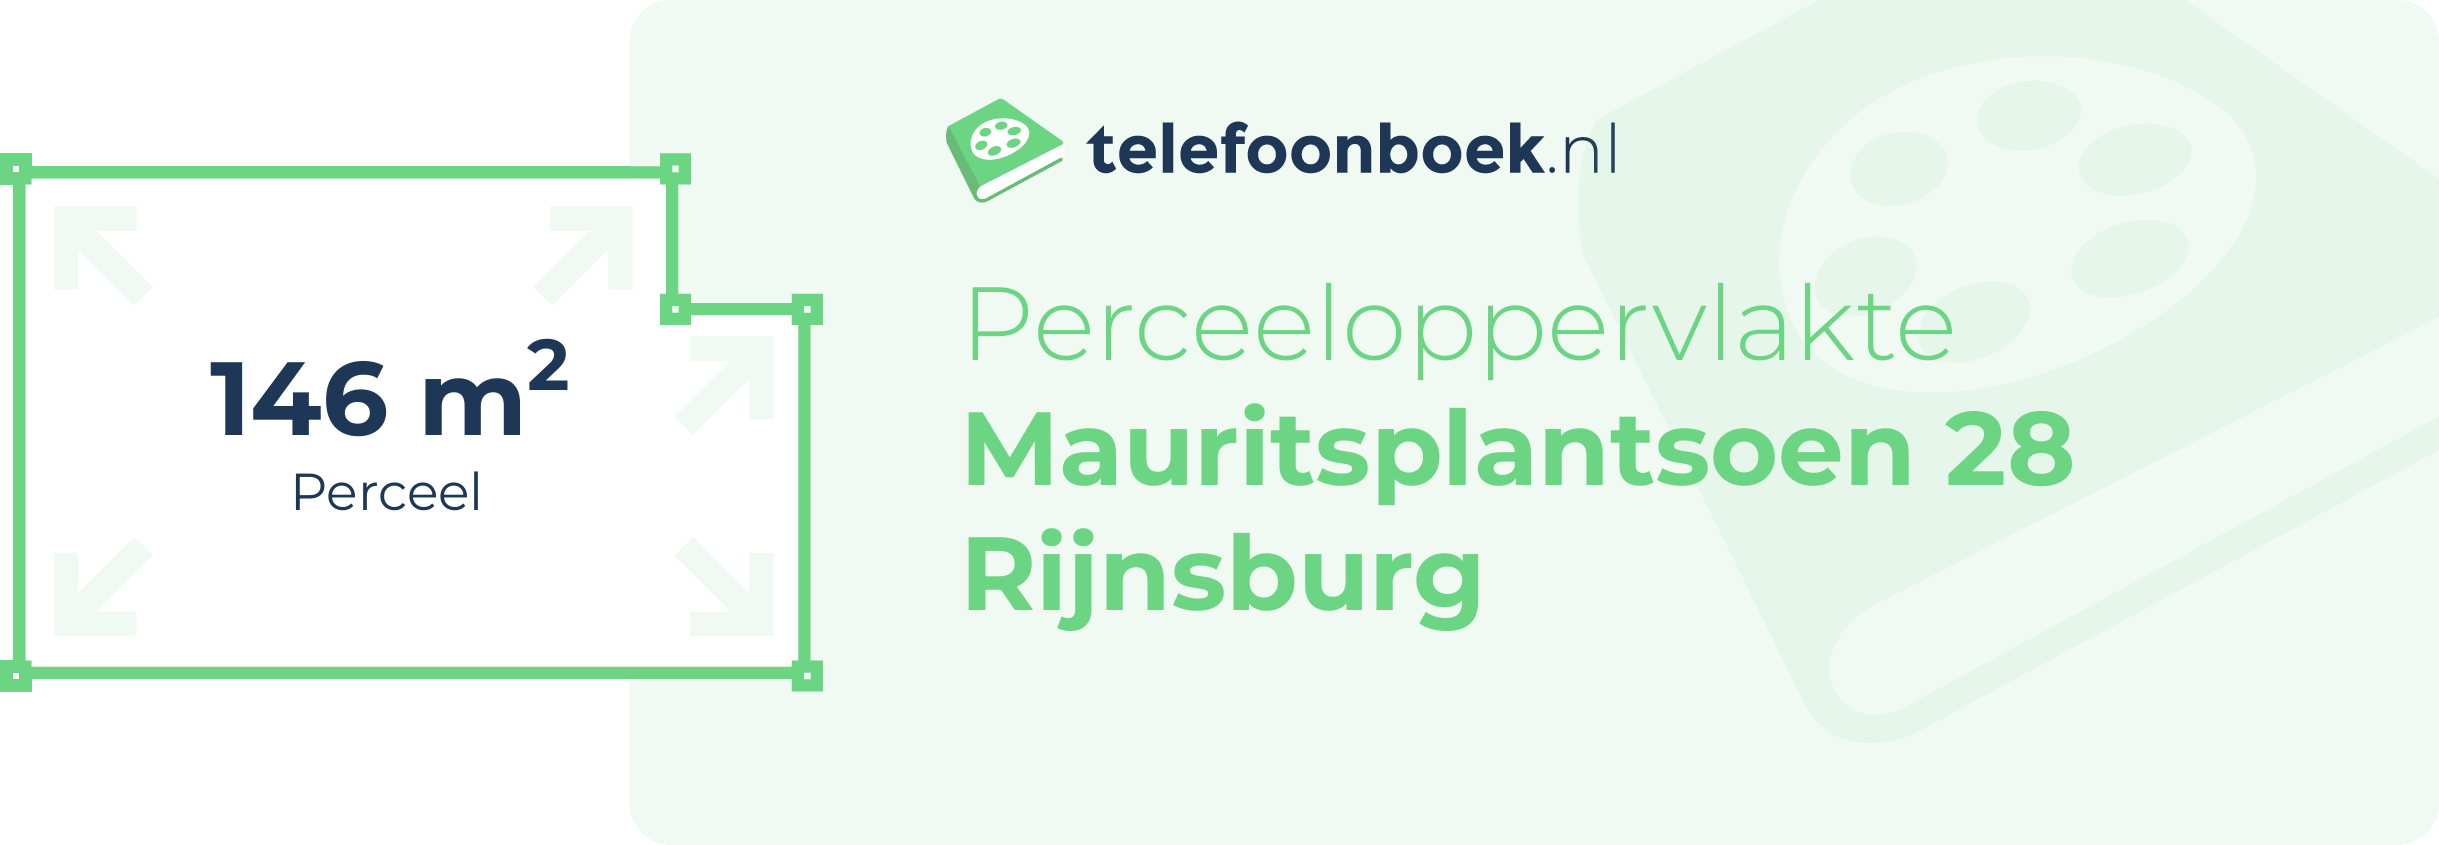 Perceeloppervlakte Mauritsplantsoen 28 Rijnsburg